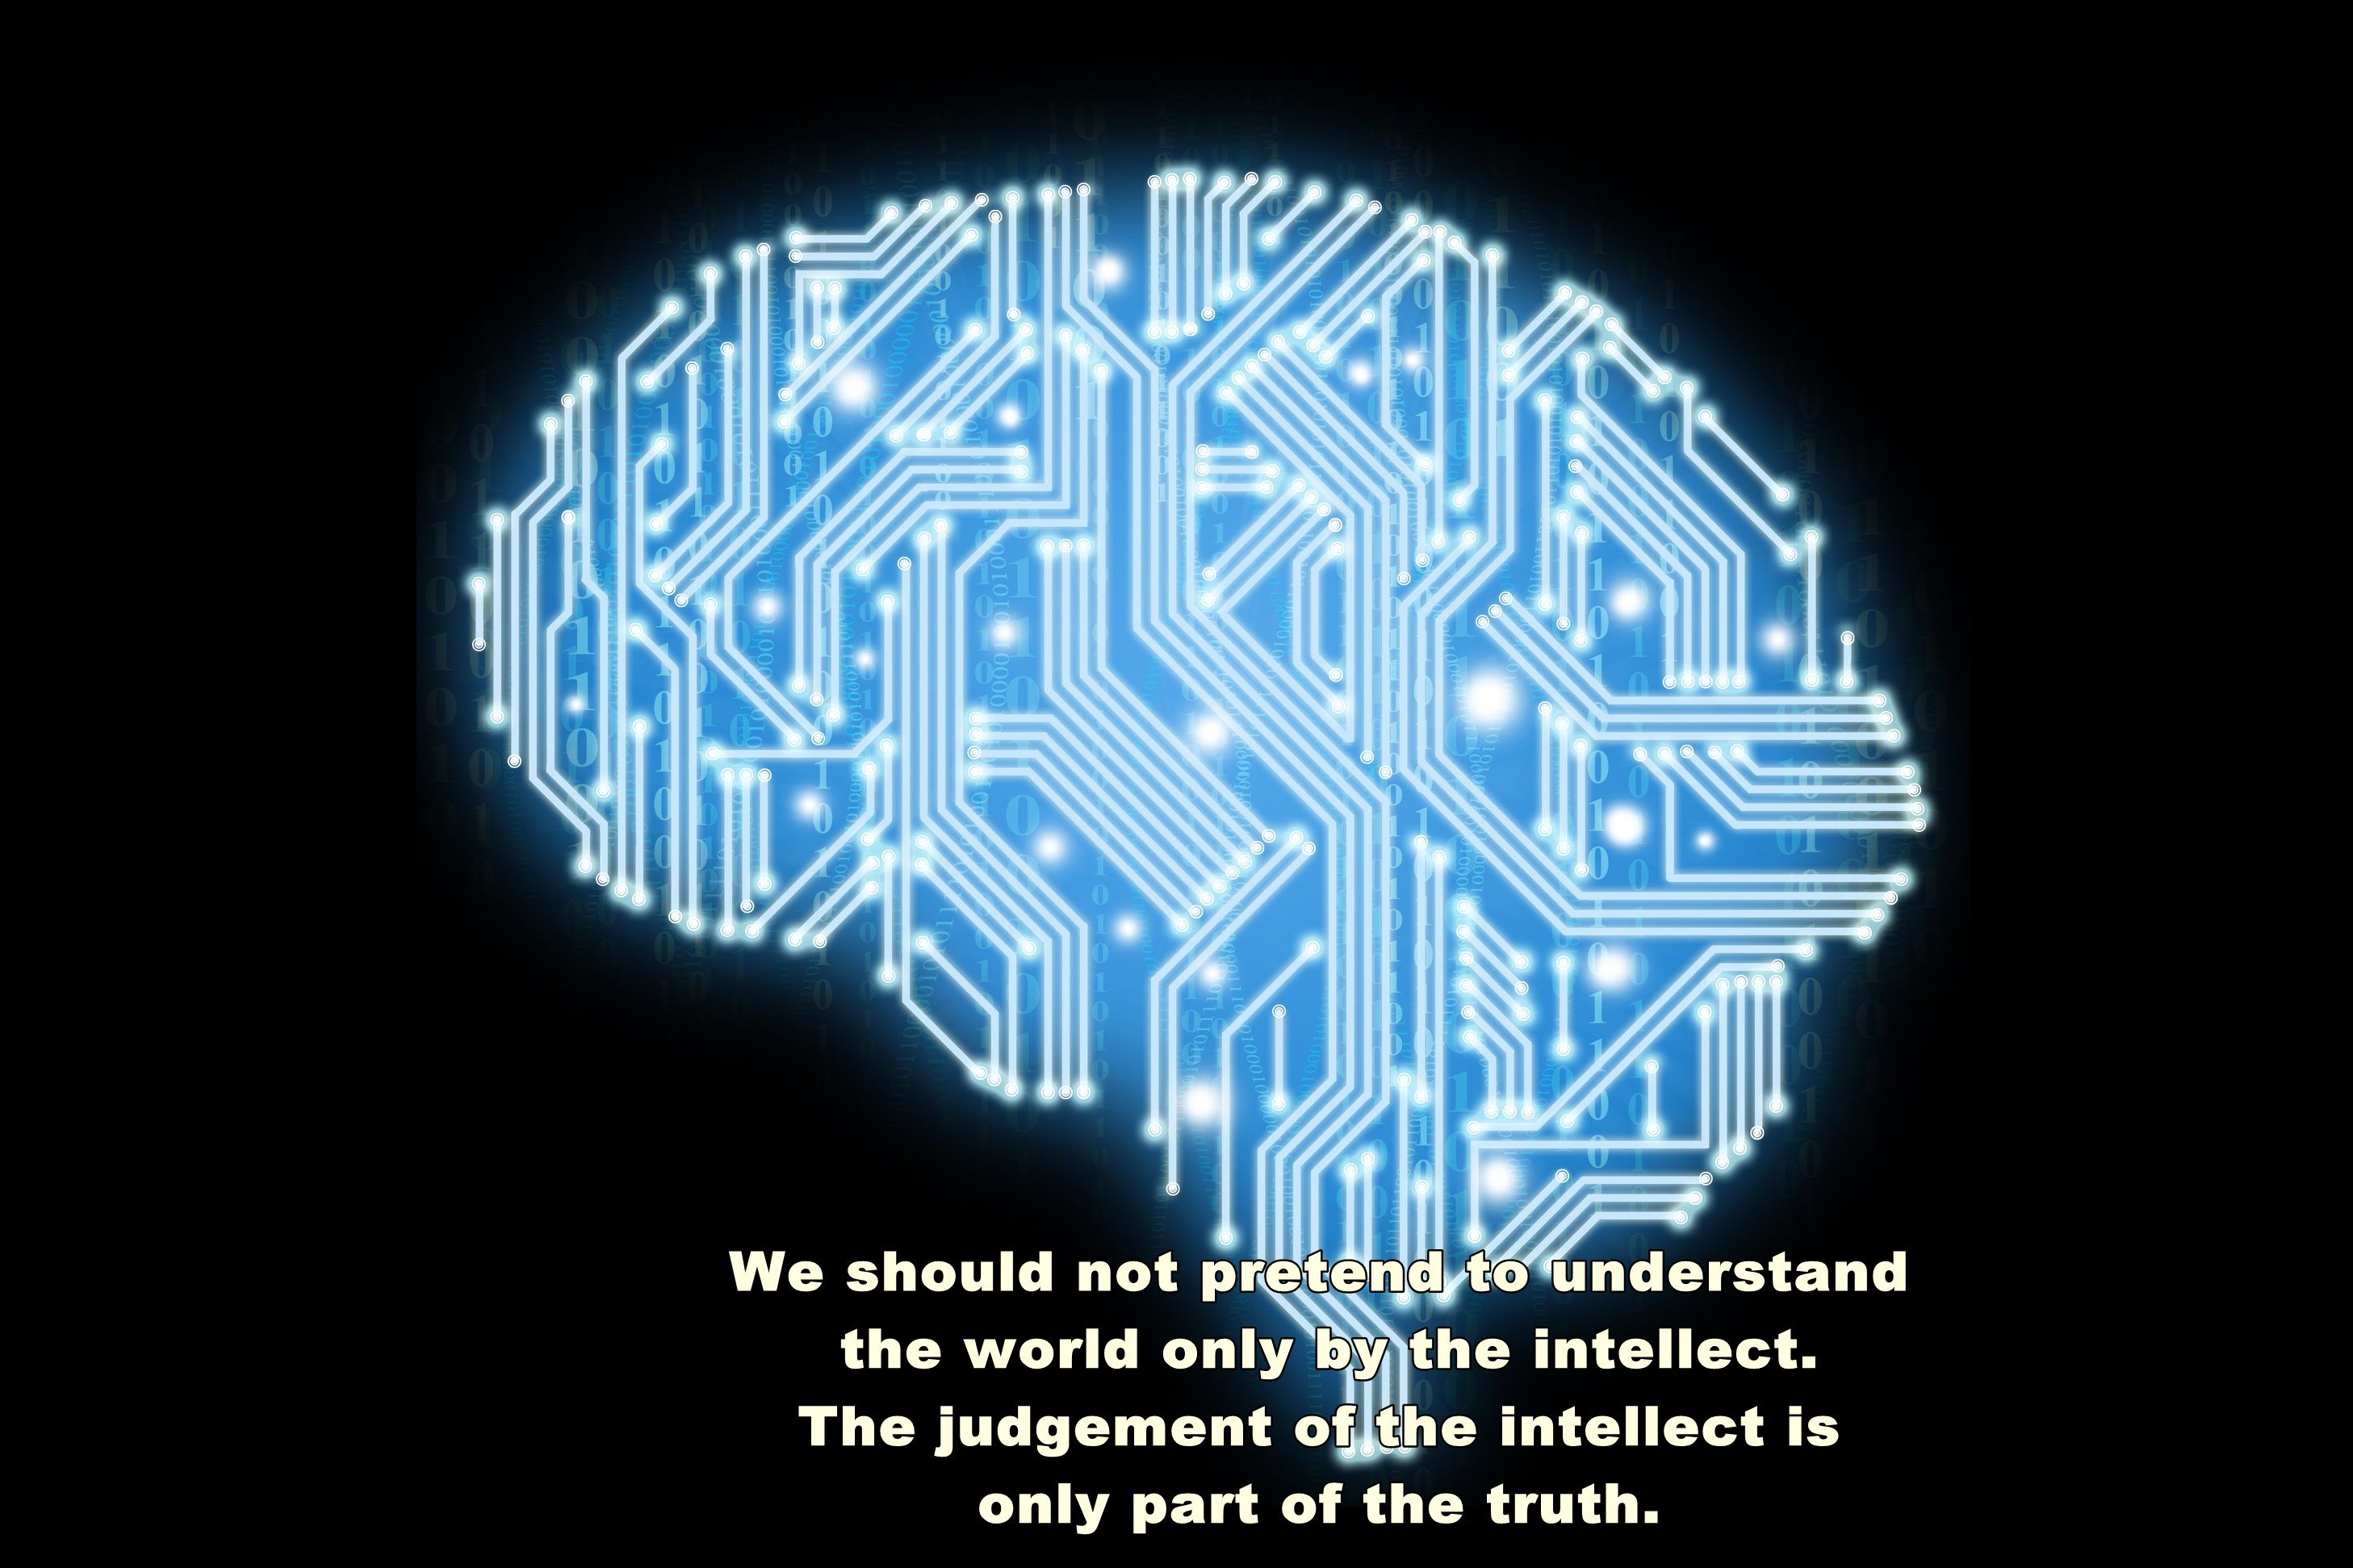 Digital-brain-wallpaper-with-intelligence-quote.jpg